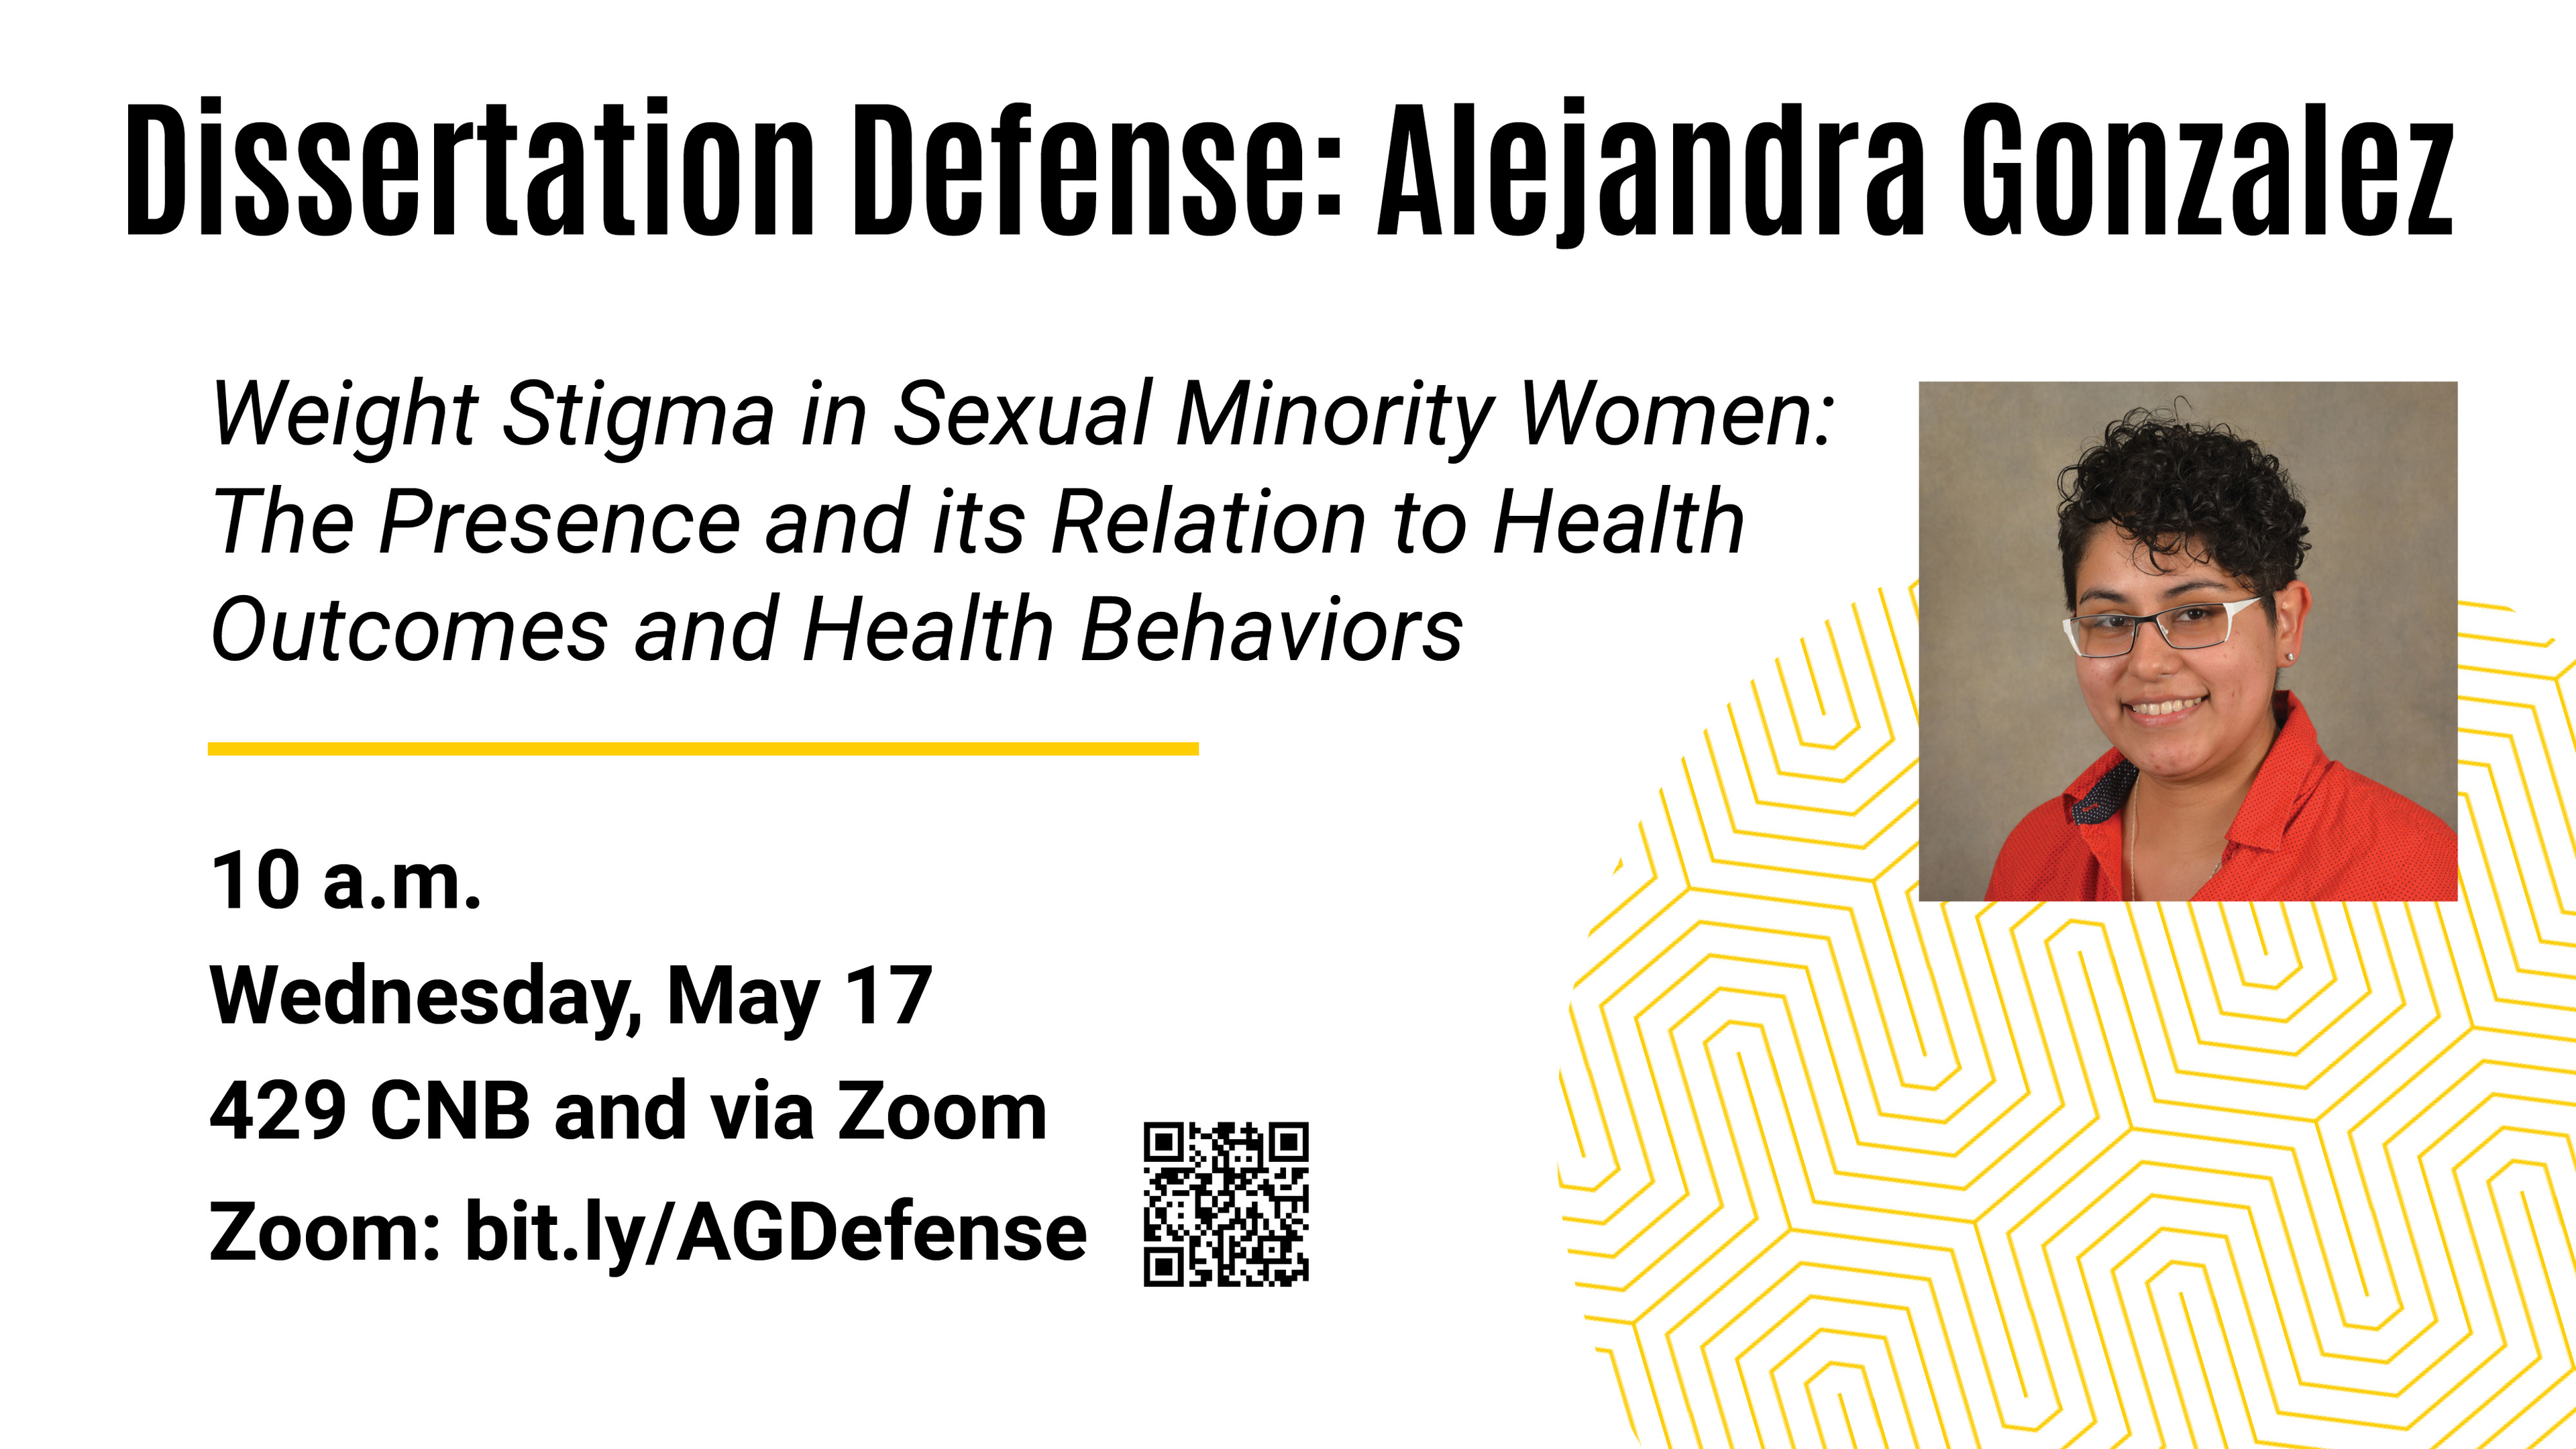 Alejandra Gonzalez PhD Defense, May 17, 10 a.m., 429 CNB or Zoom